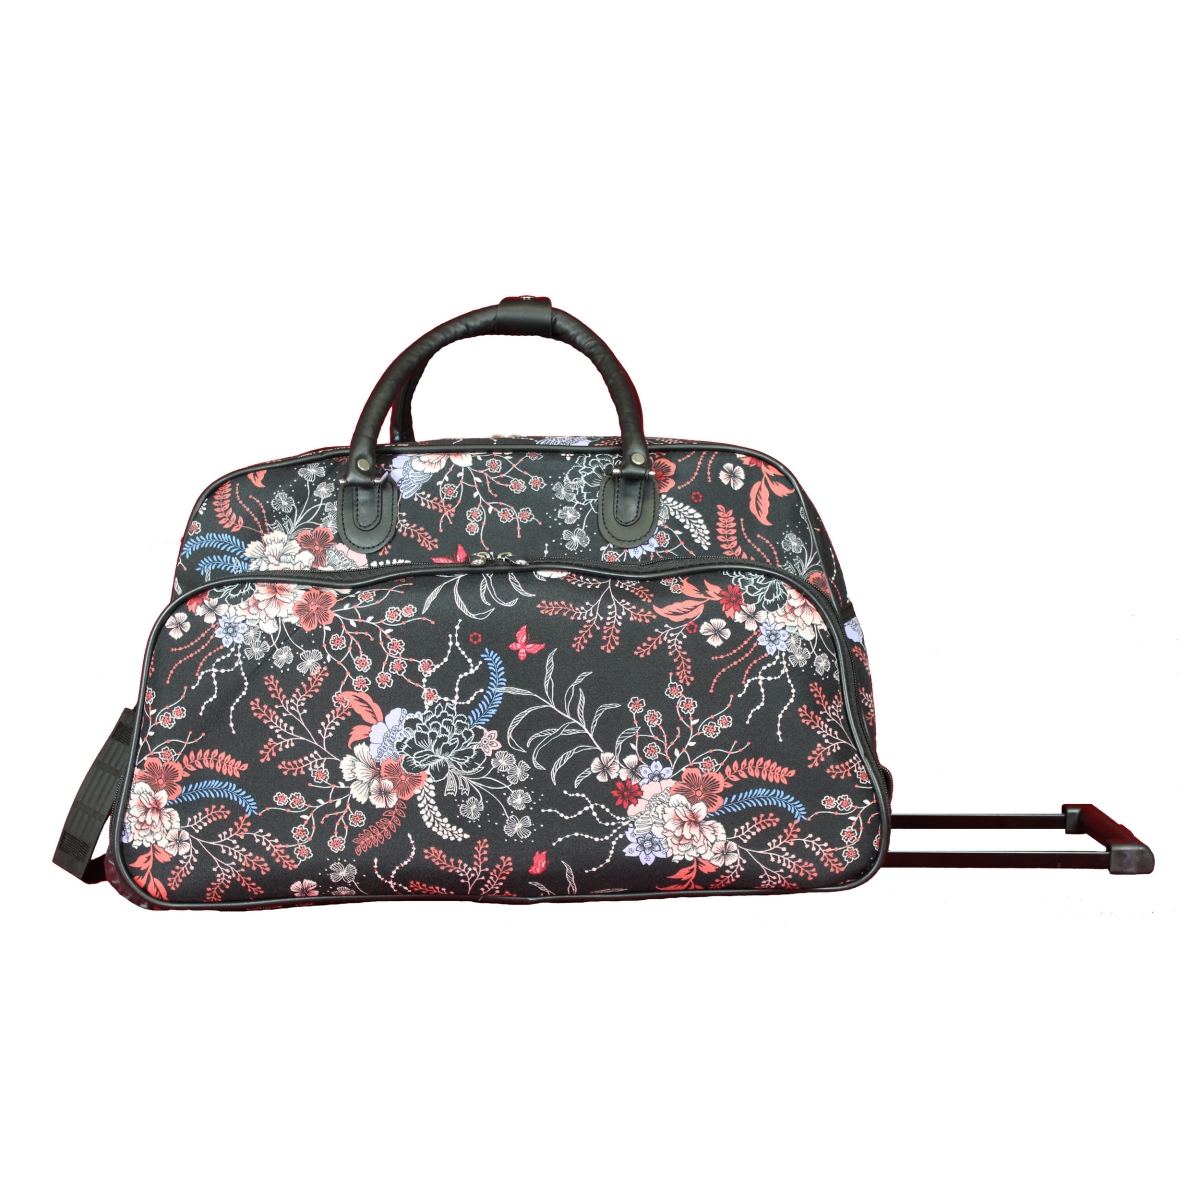 8112022-205 21 In. Carry On Rolling Duffel Bag - Flower Bloom